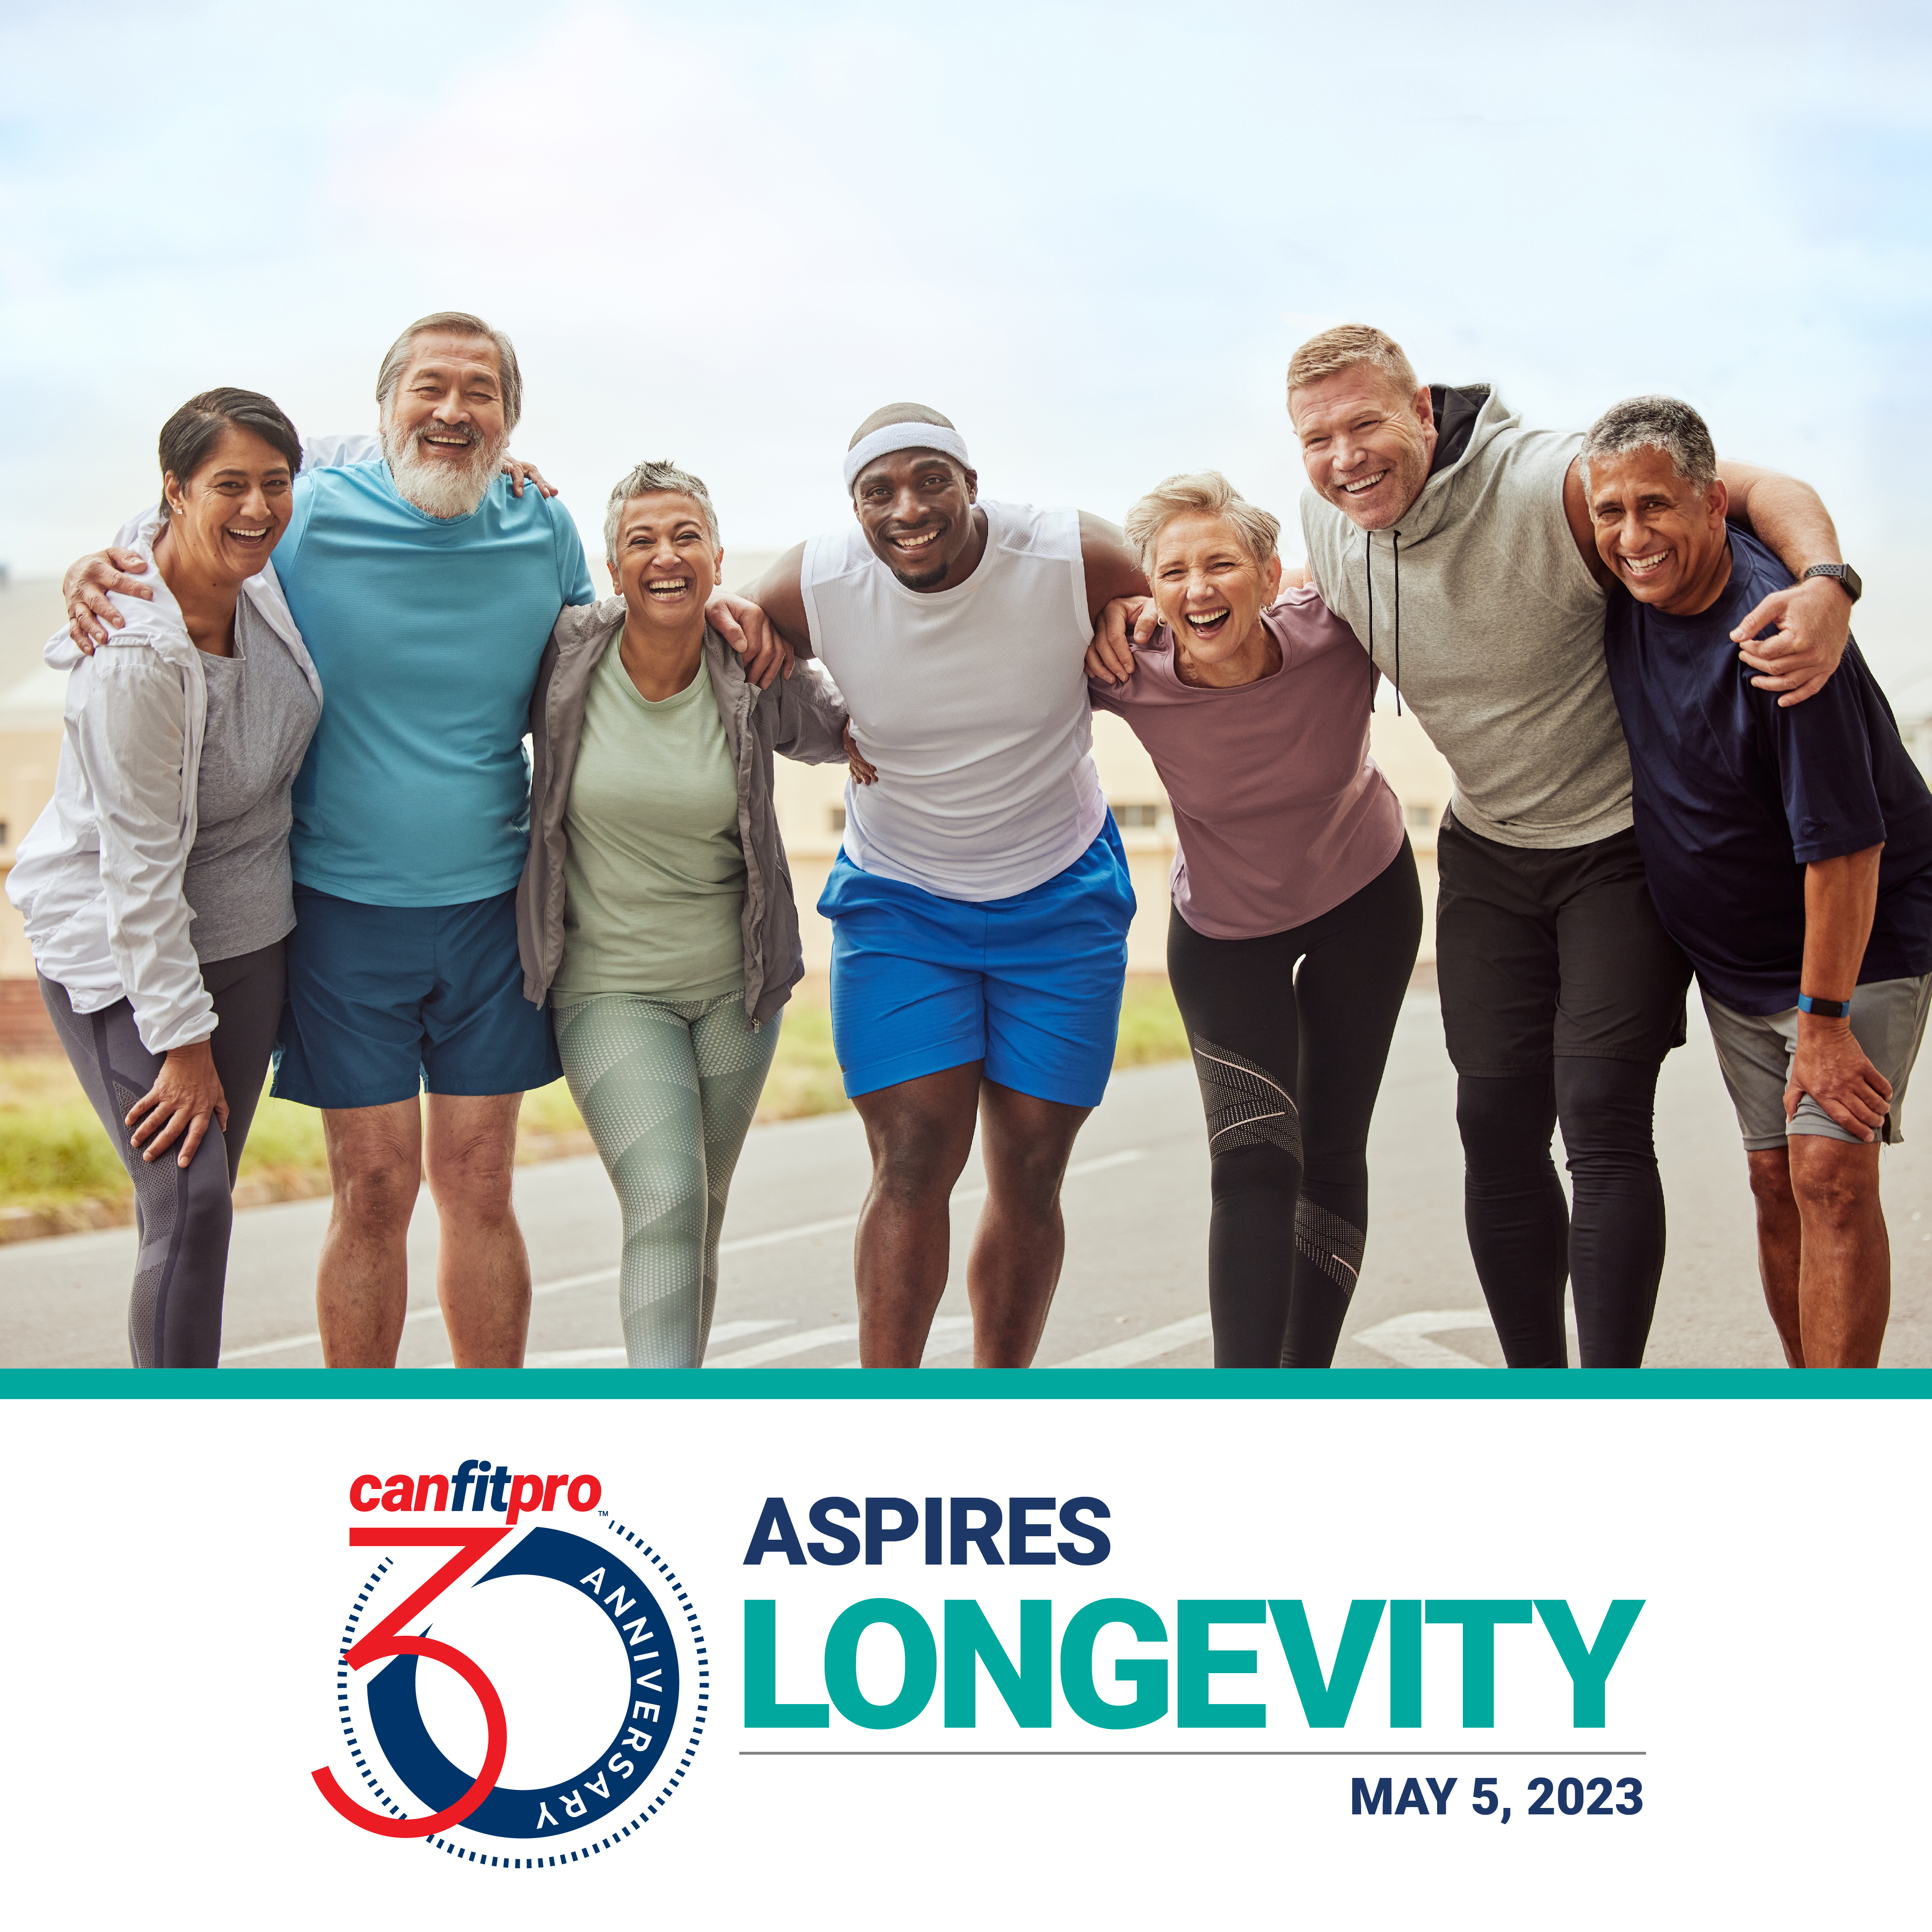 canfitpro ASPIRES Longevity event